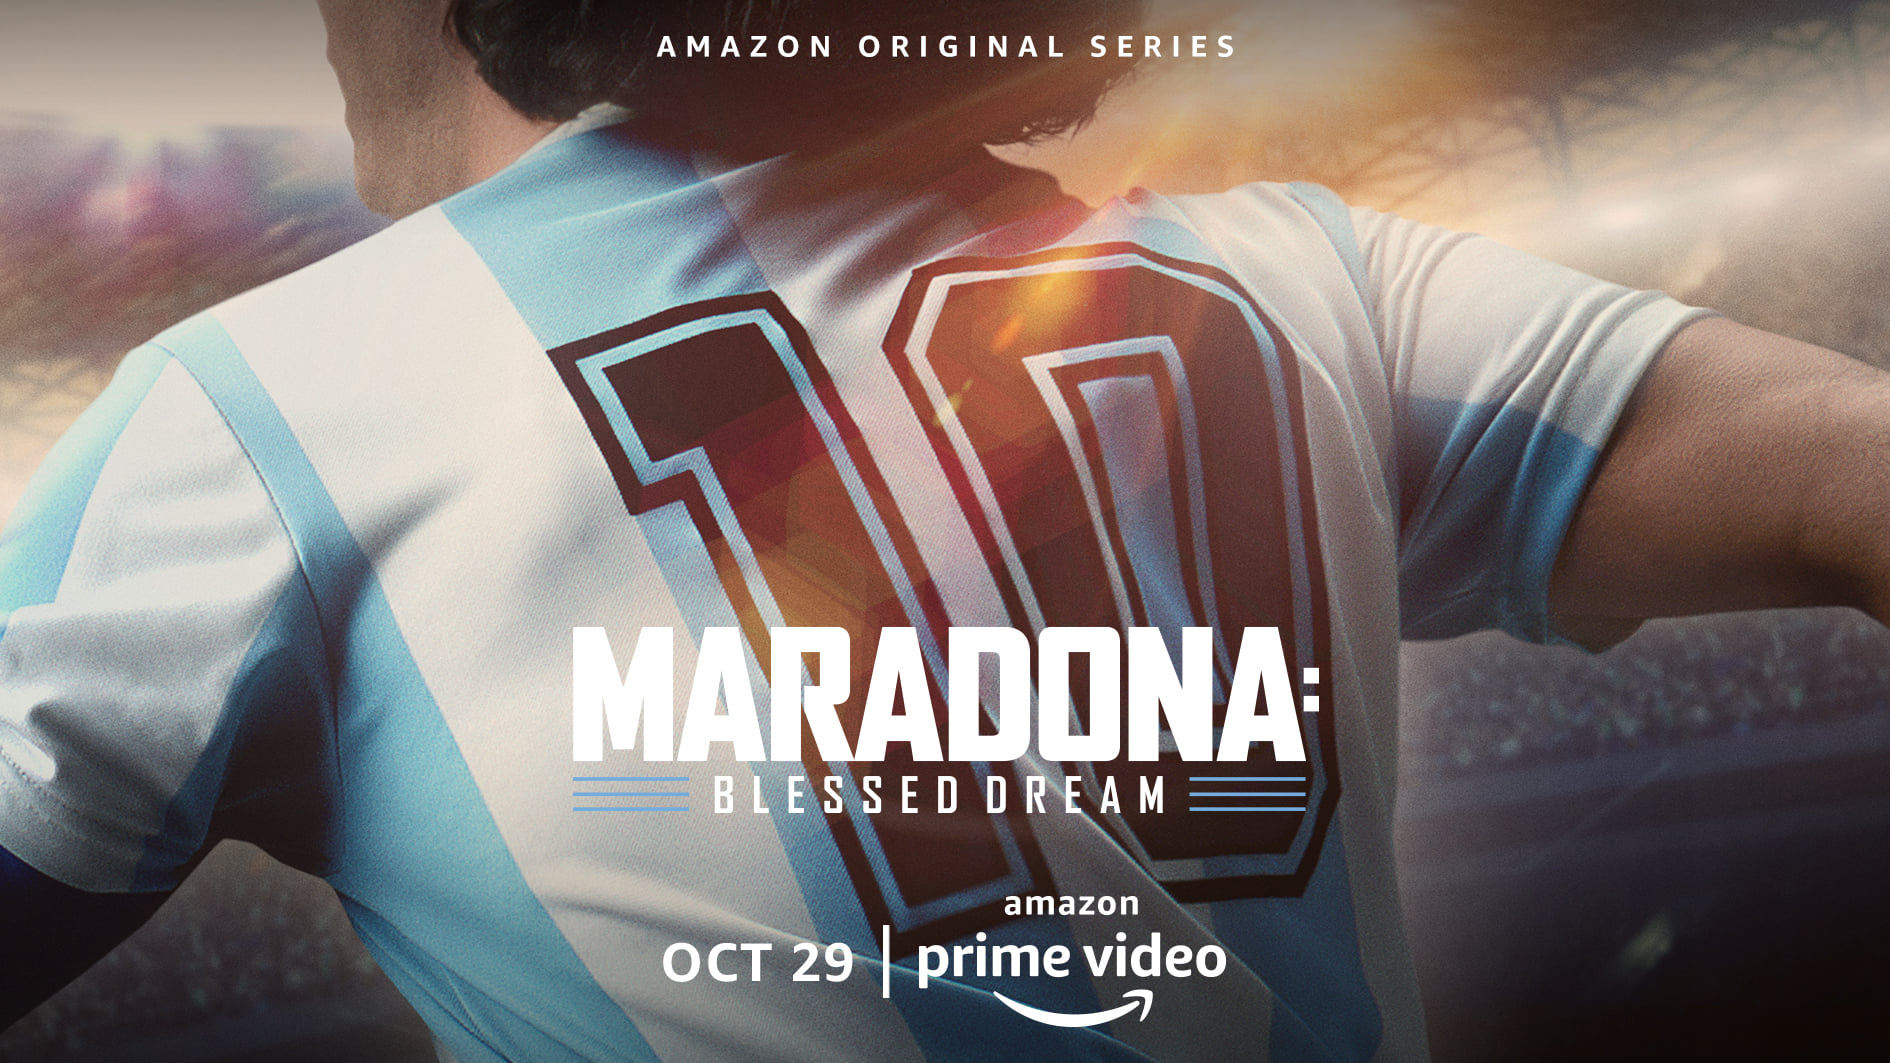 Amazon-video-maradona-blessed-dream.jpg